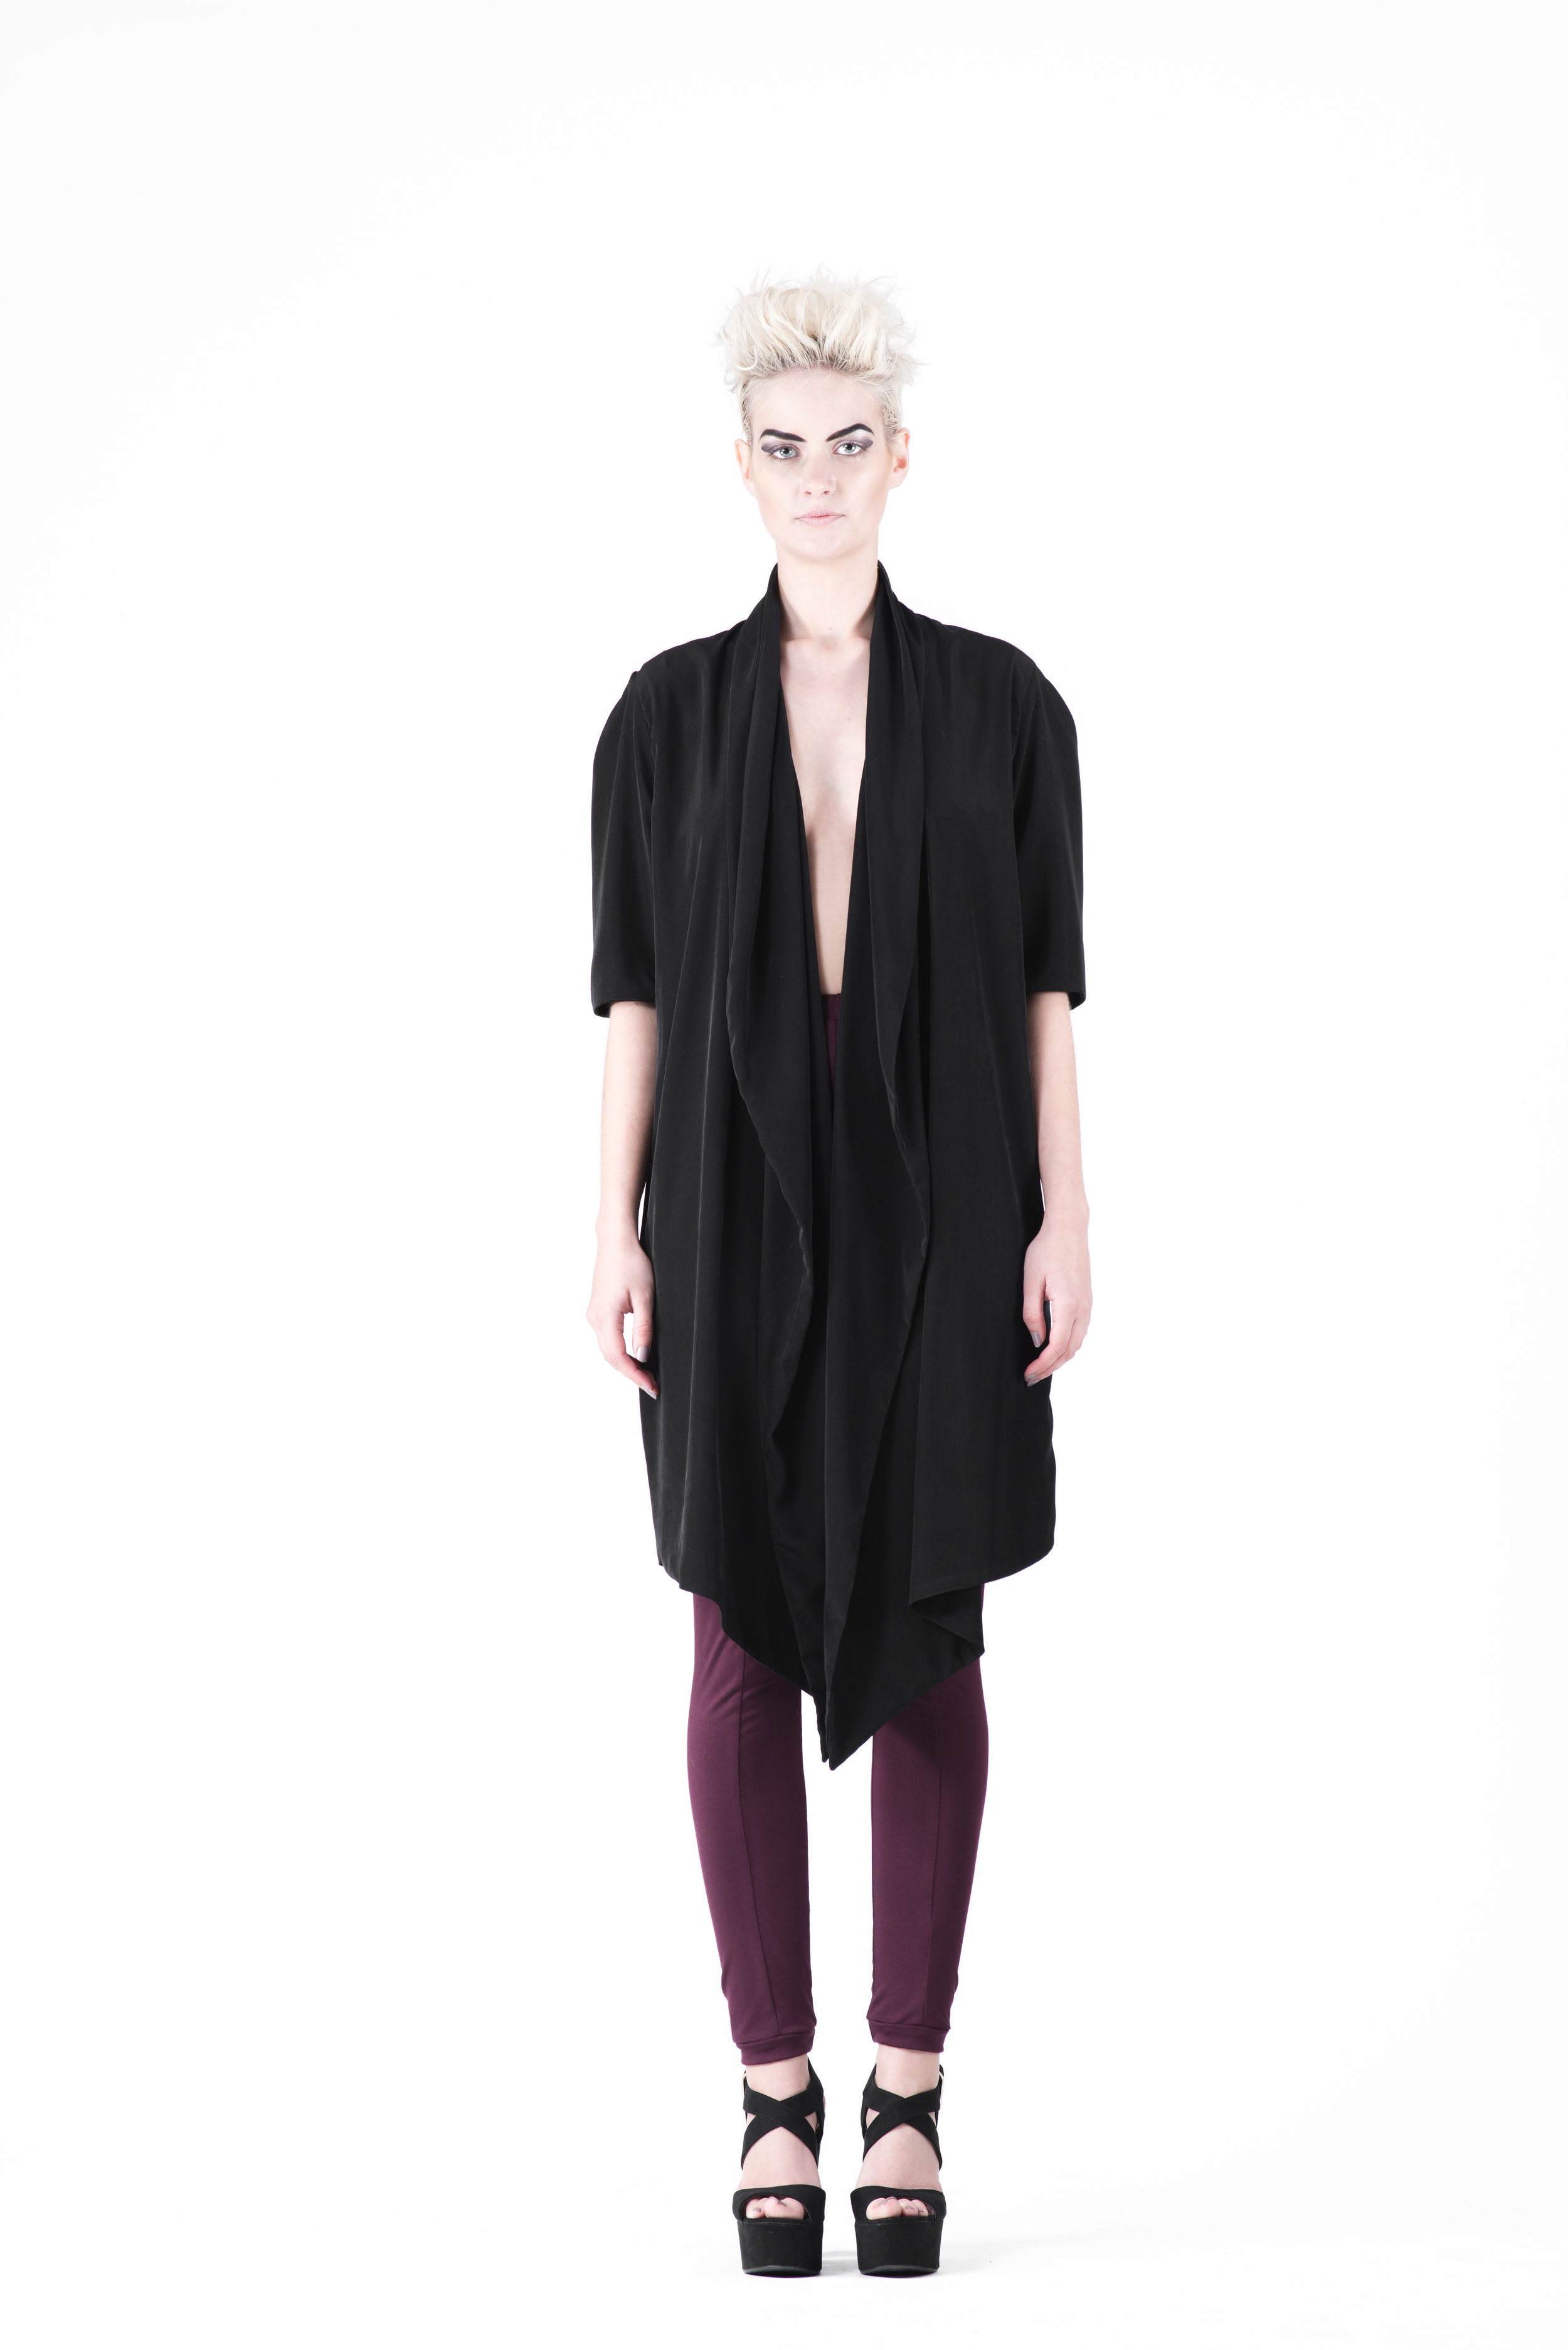 zaramia-ava-zaramiaava-leeds-fashion-designer-ethical-sustainable-tailored-minimalist-maika-dress-obi-belt-black-versatile-drape-cowl-styling-womenswear-models-photoshoot-43